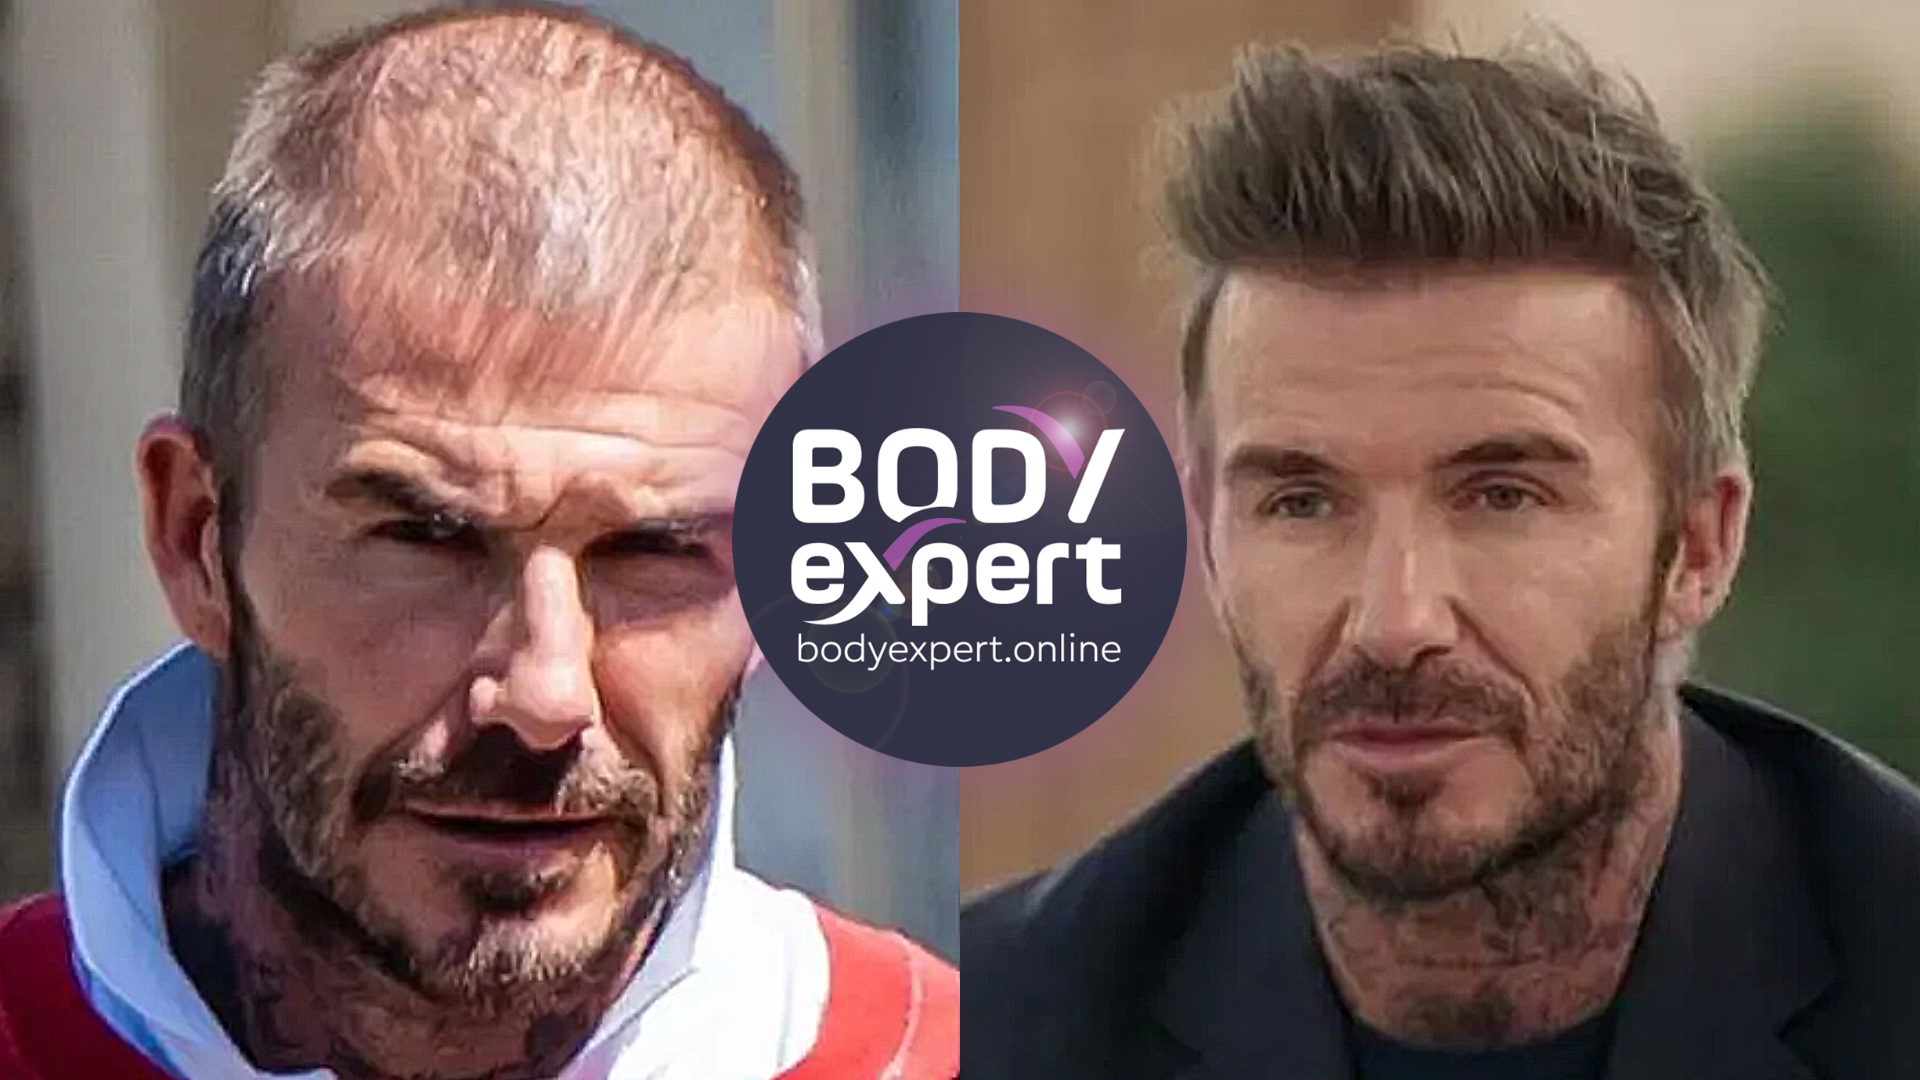 has David Beckham had a hair transplant ? Yes he has!